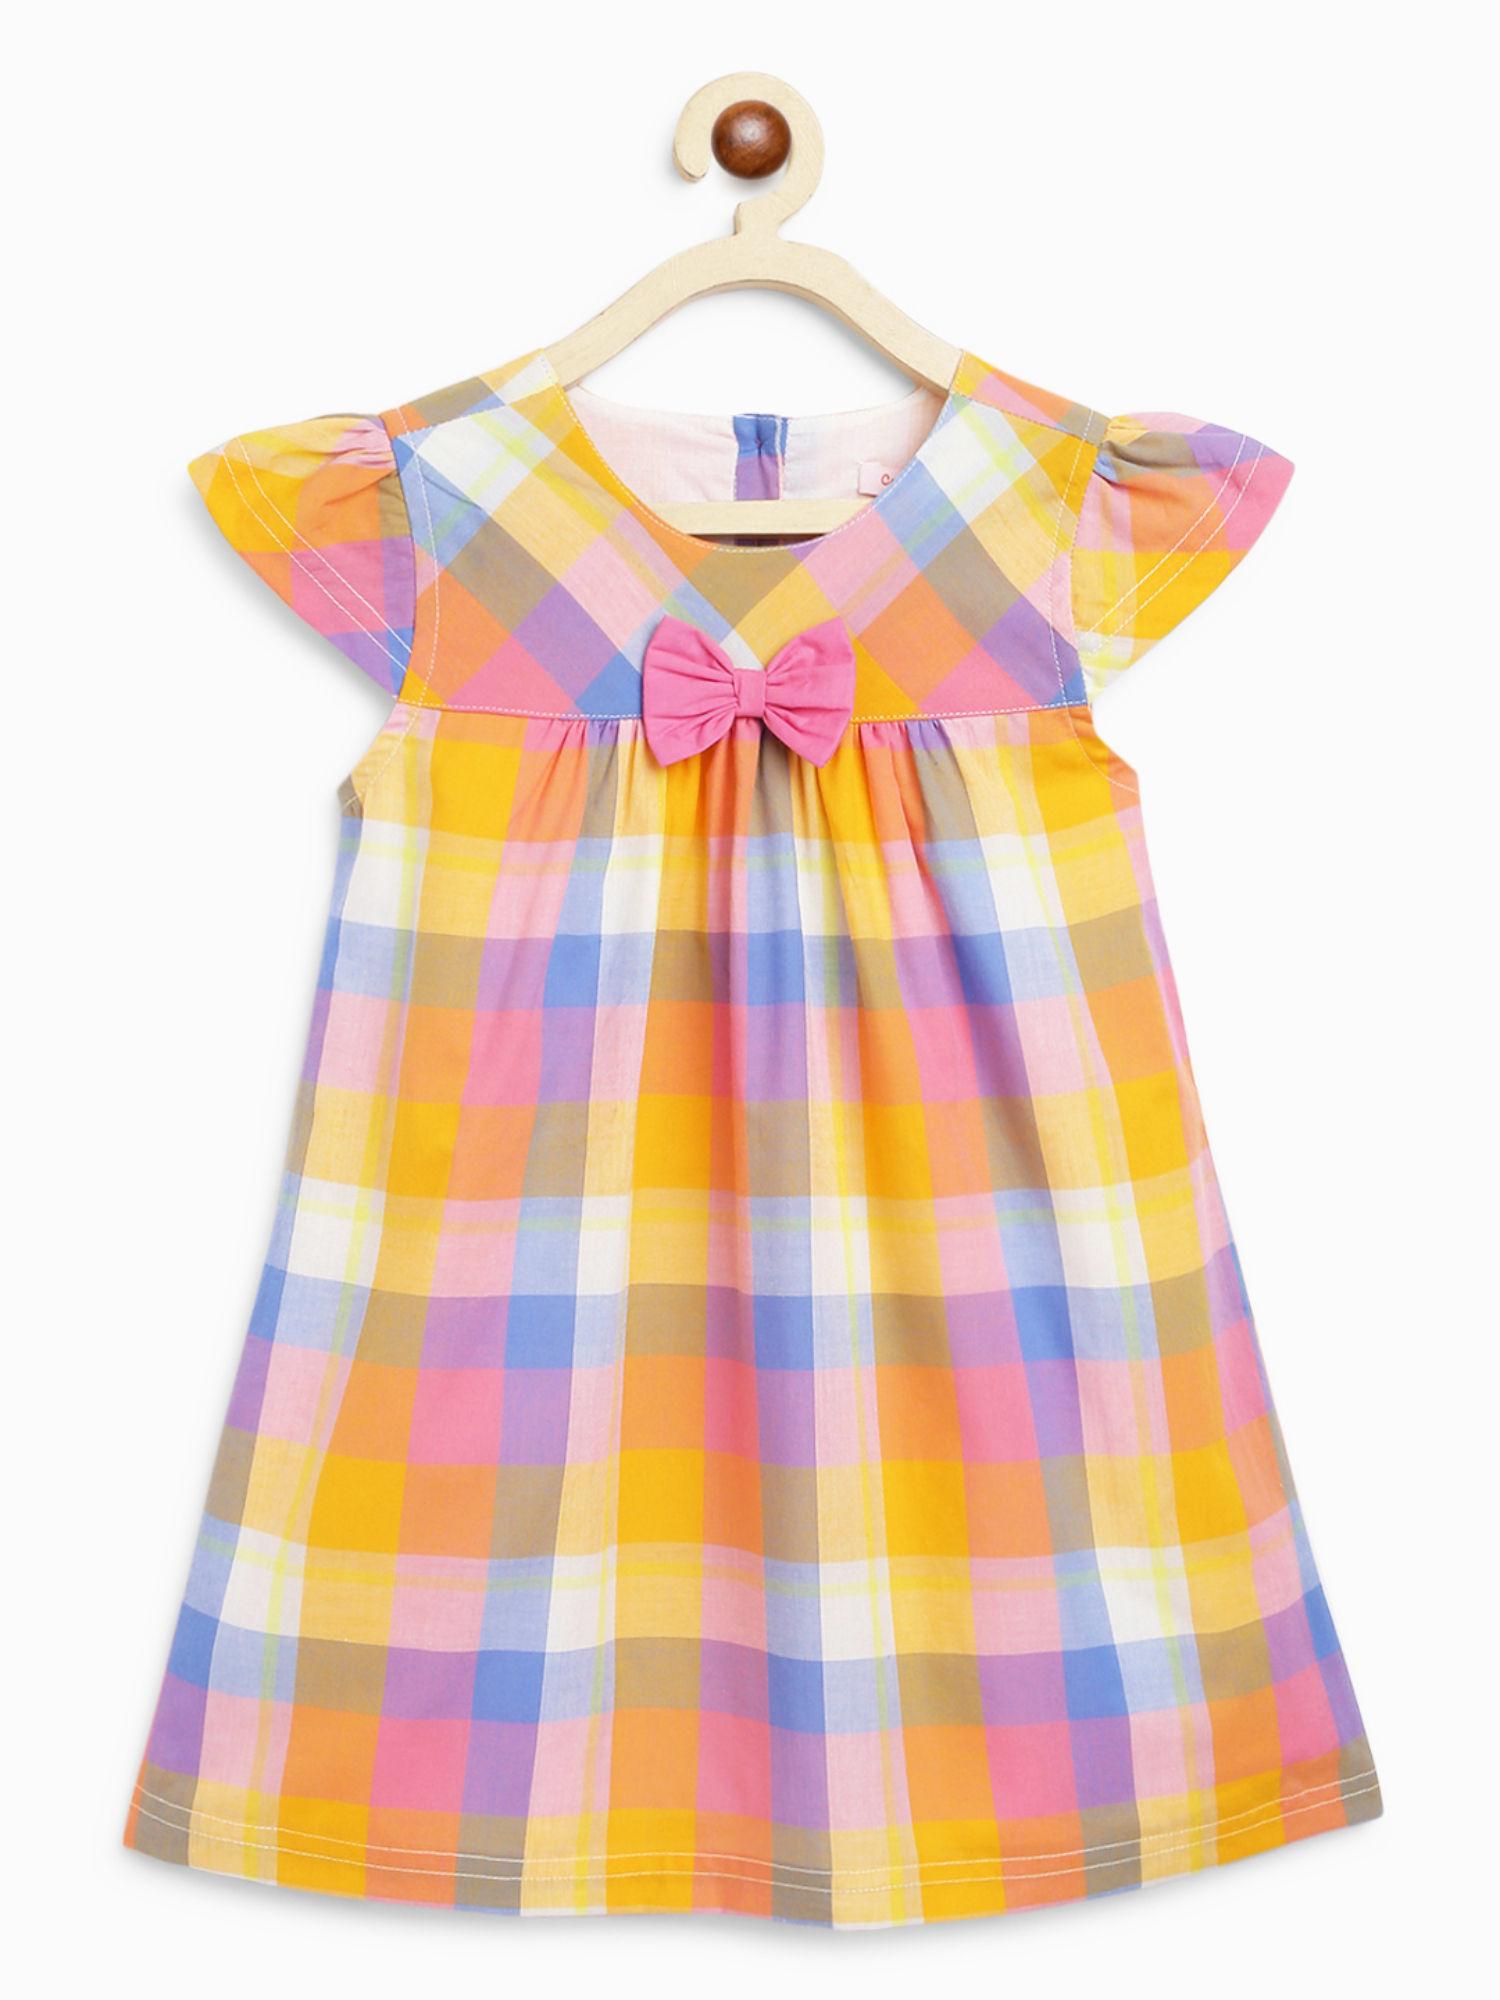 girls suzy dress with bow - pastel rainbow checks - multi color